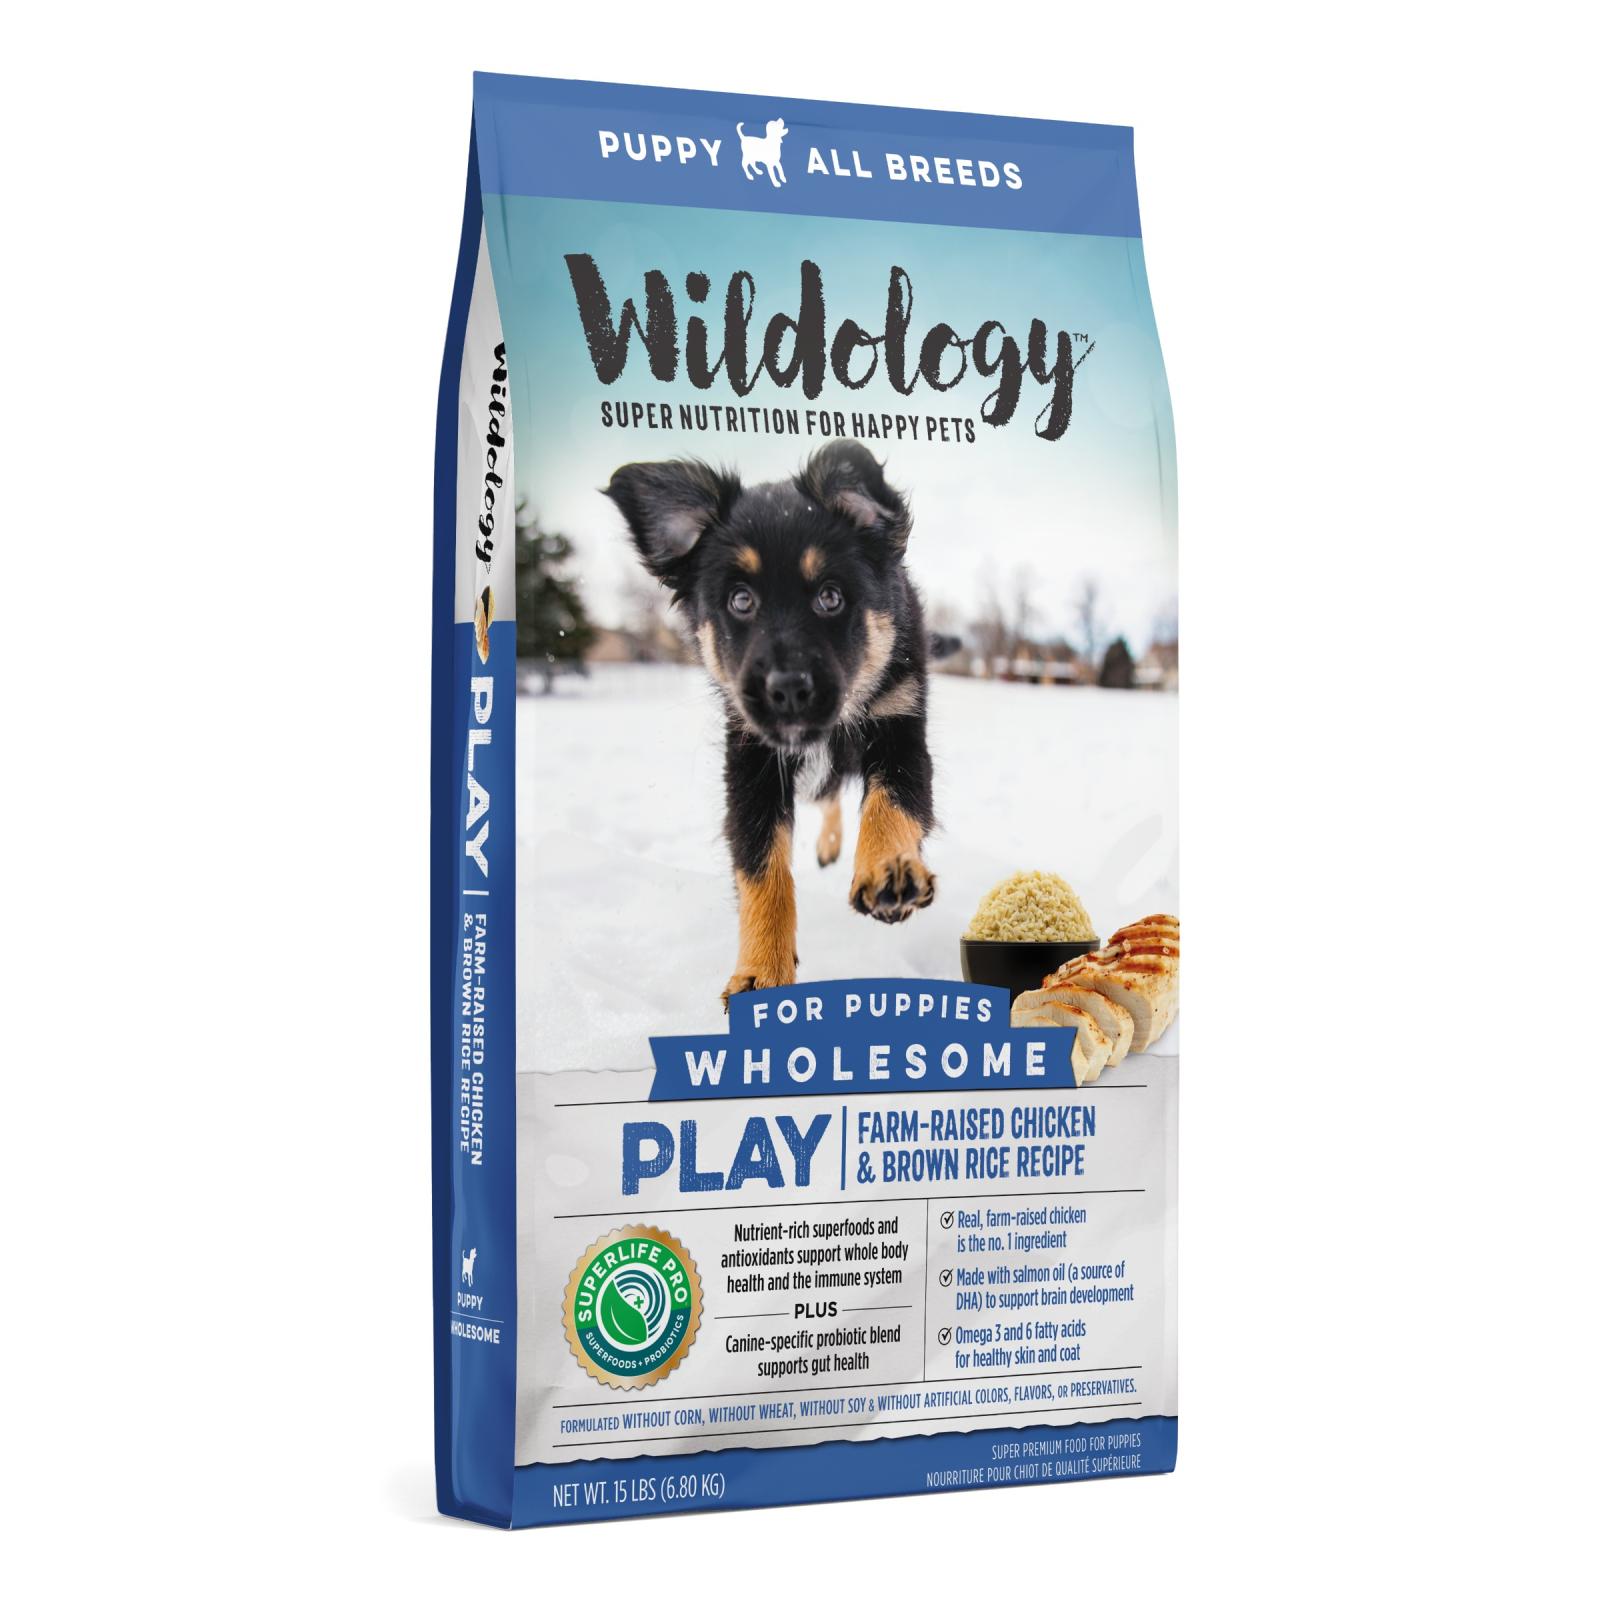 Wildology Play Chicken & Rice Puppy Food 15lb